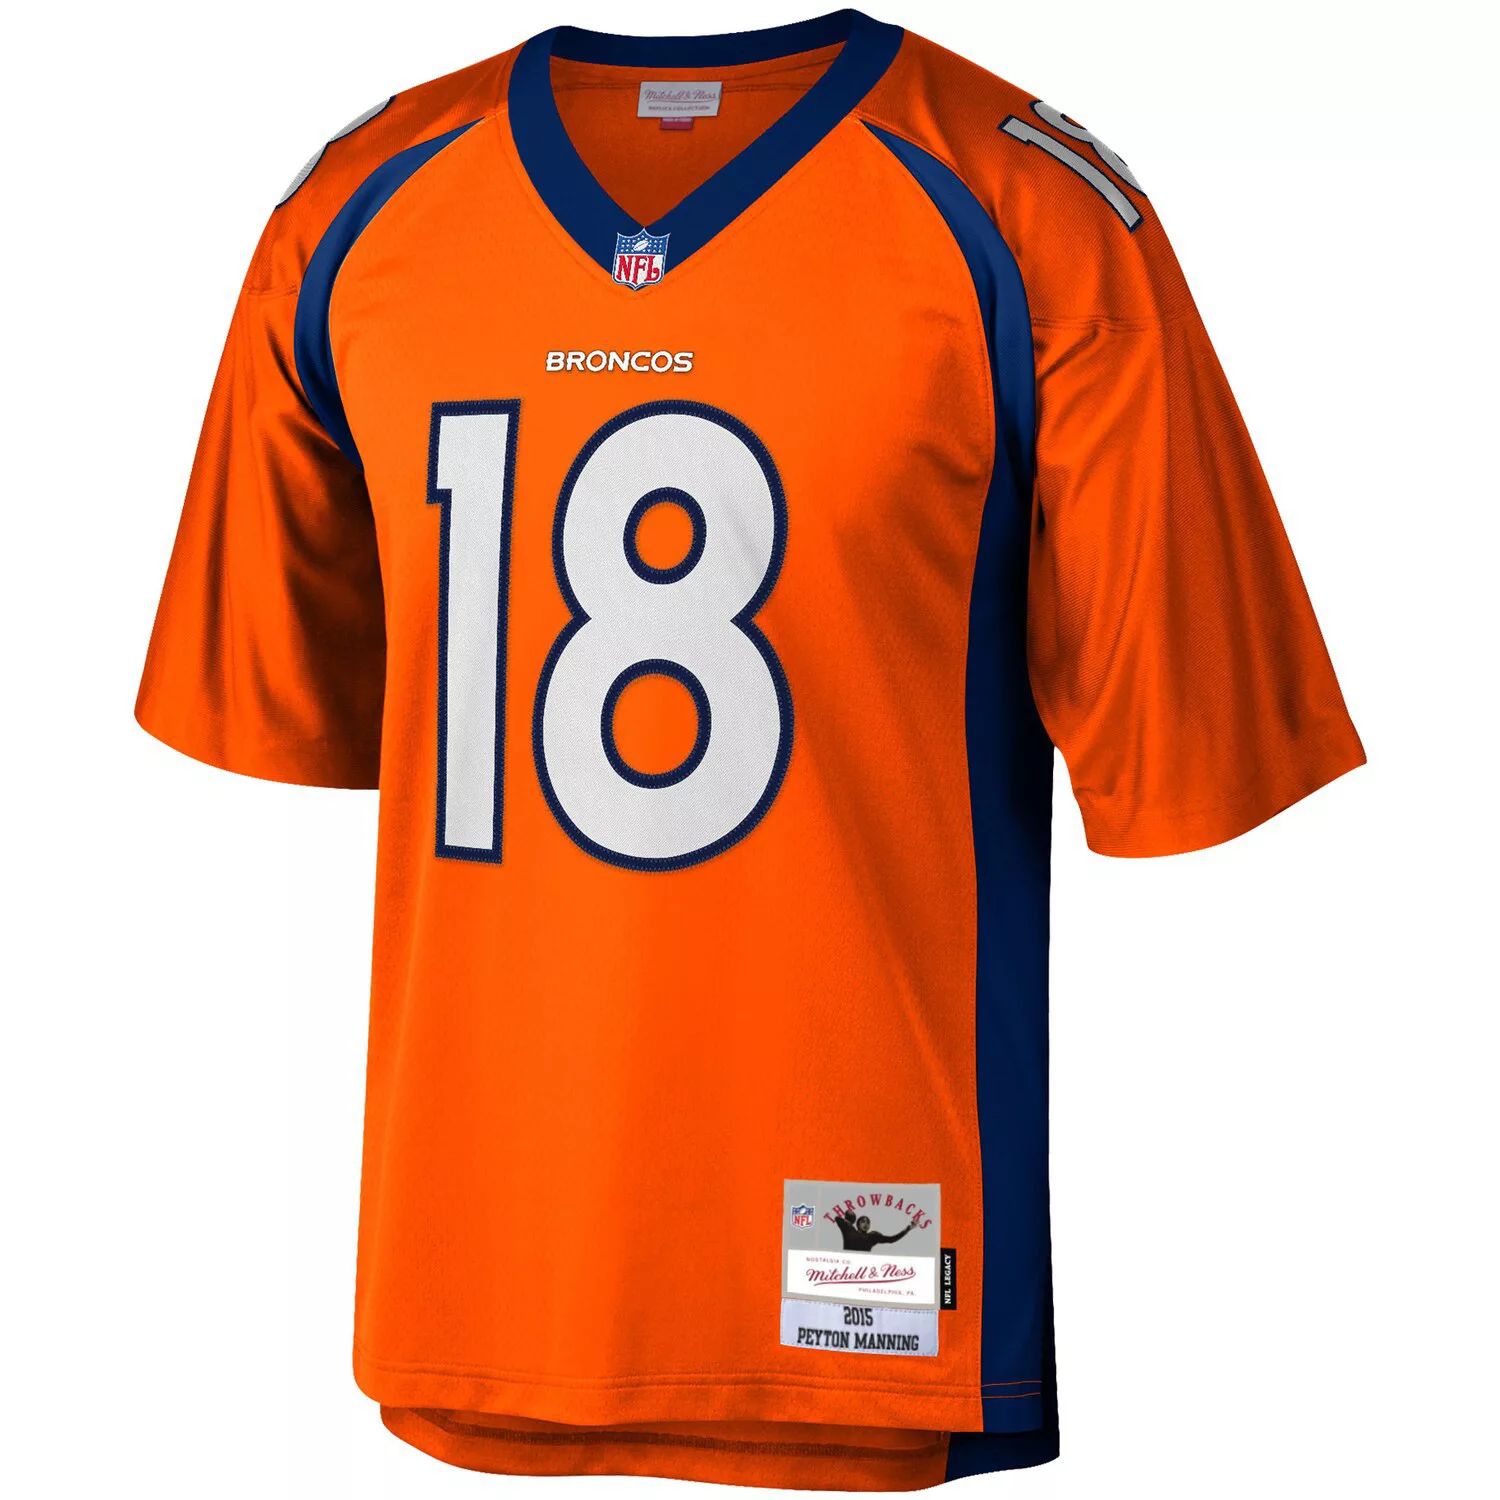 Мужская футболка Mitchell & Ness Peyton Manning Orange Denver Broncos Big & Tall 2015, реплика вышедшего на пенсию игрока мужская футболка peyton manning navy orange denver broncos 2015 split legacy копия джерси mitchell